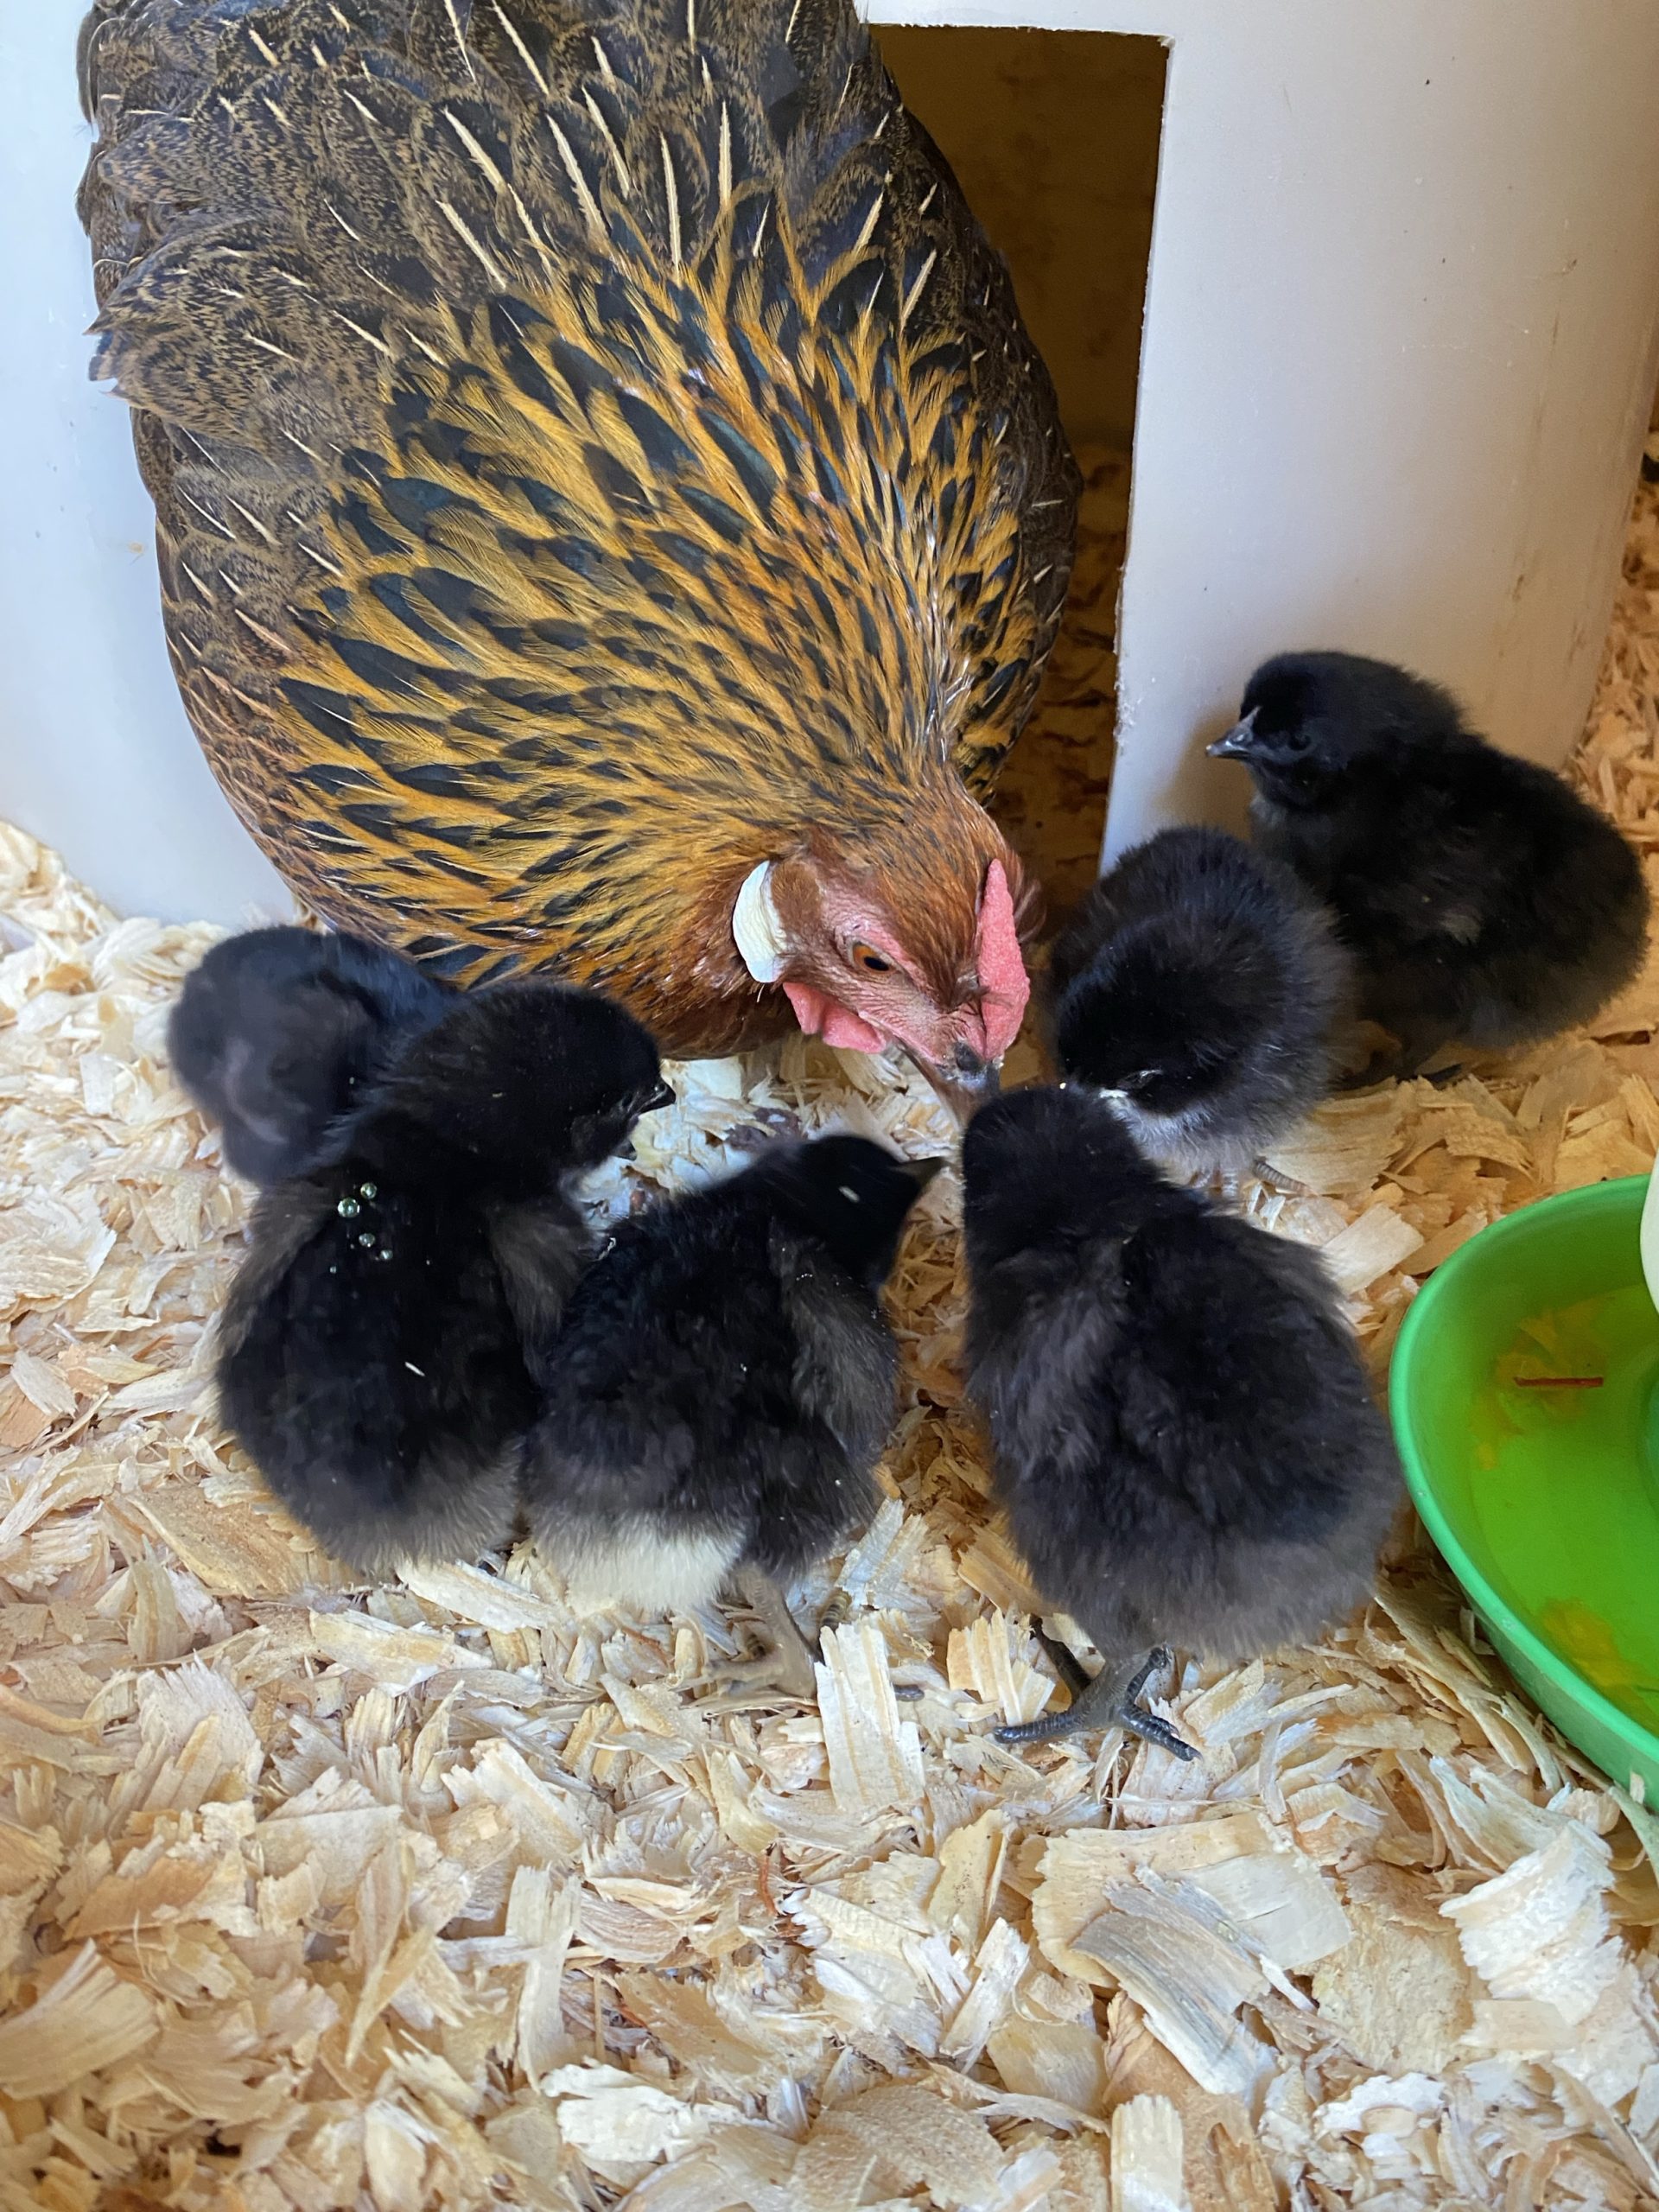 Hen with chicks (Photo: HPJ staff)